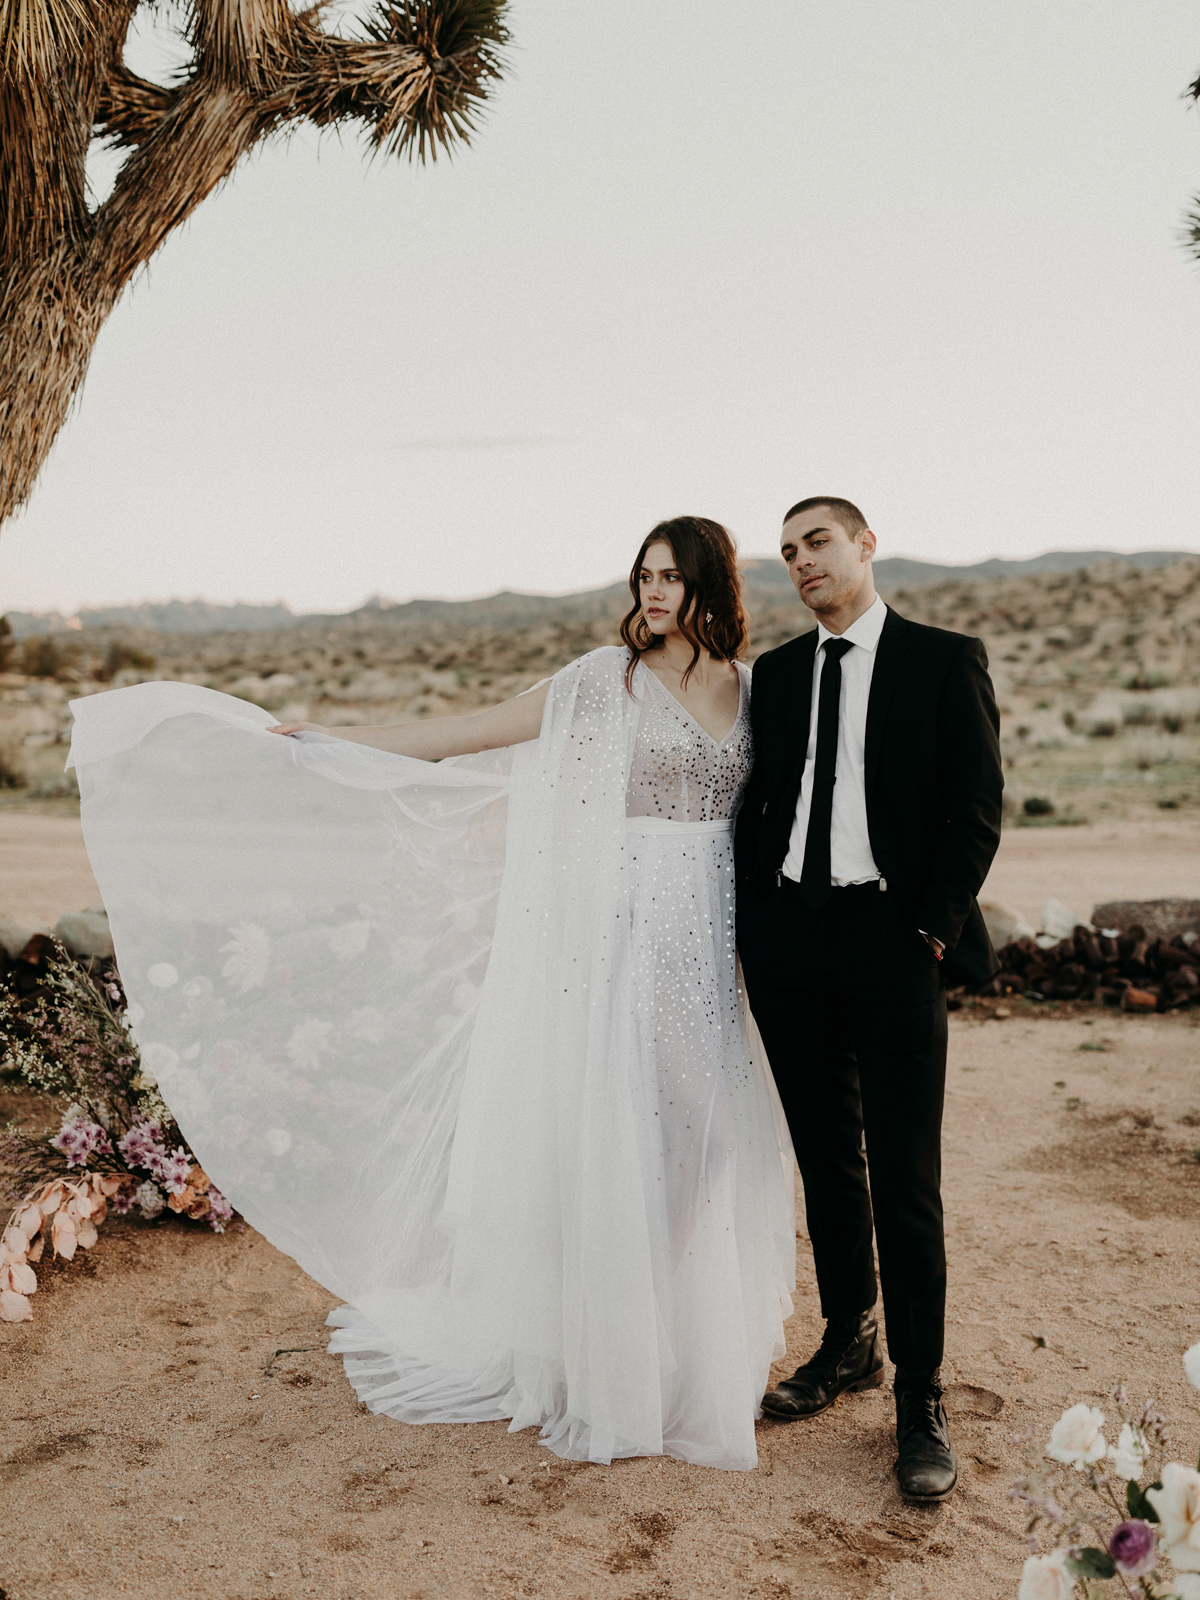 Rugged Desert Wedding Inspiration